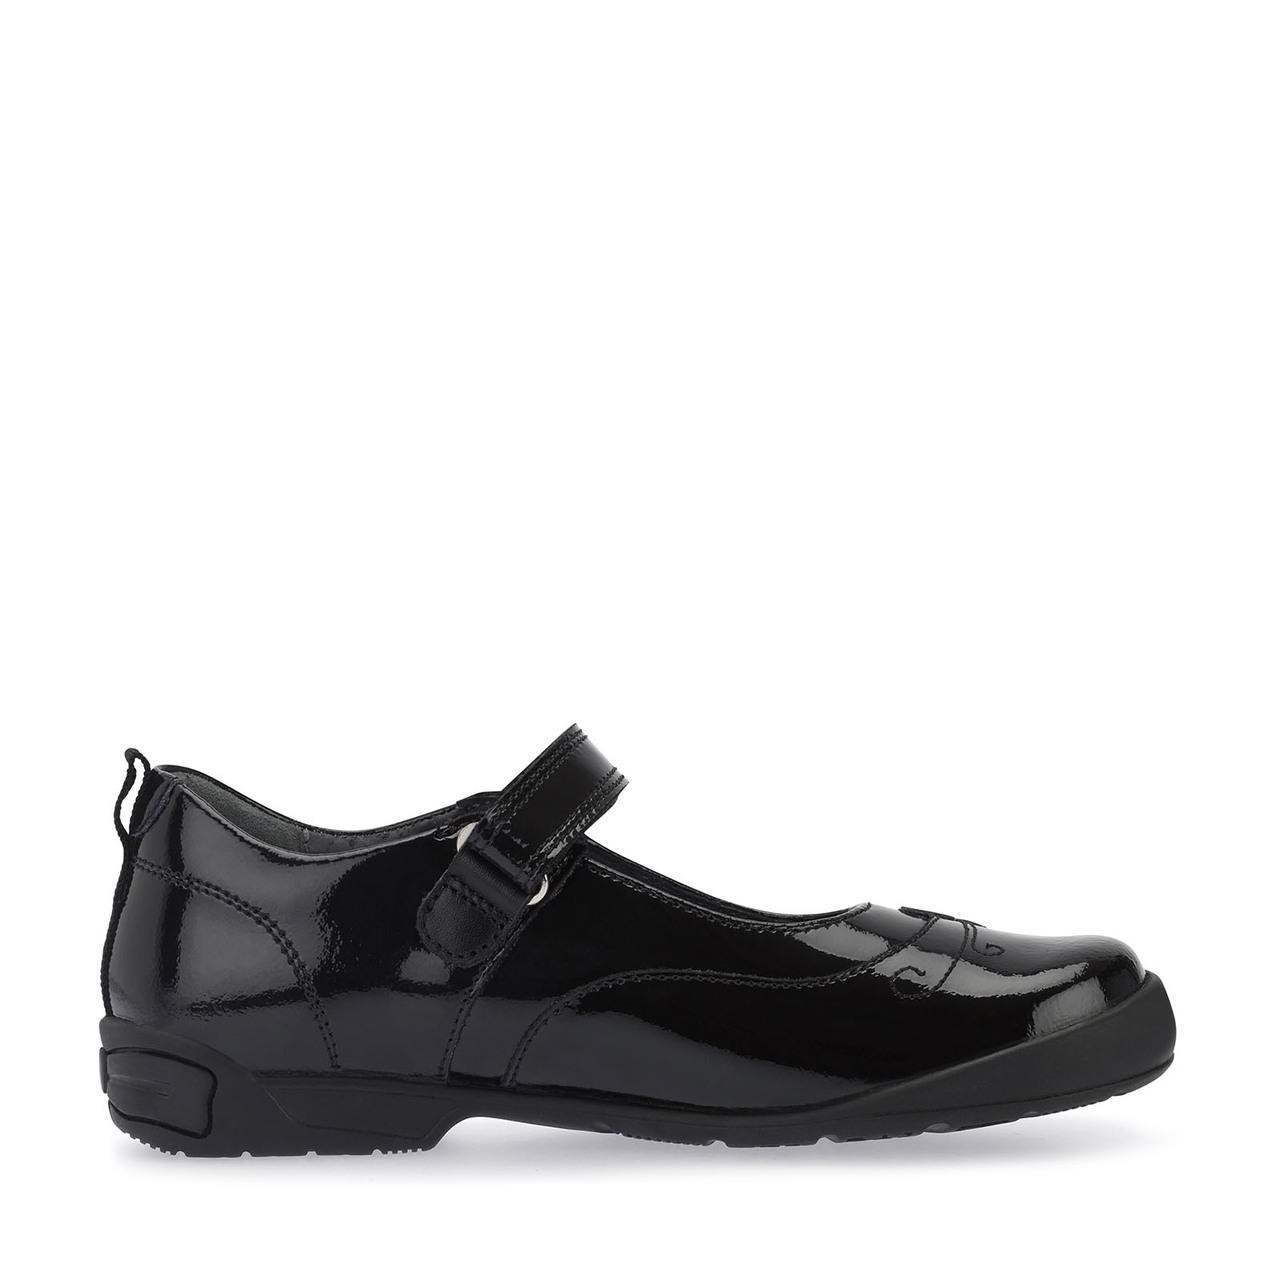 Pump, Black patent girls riptape school shoes - Start-Rite Shoes Limited